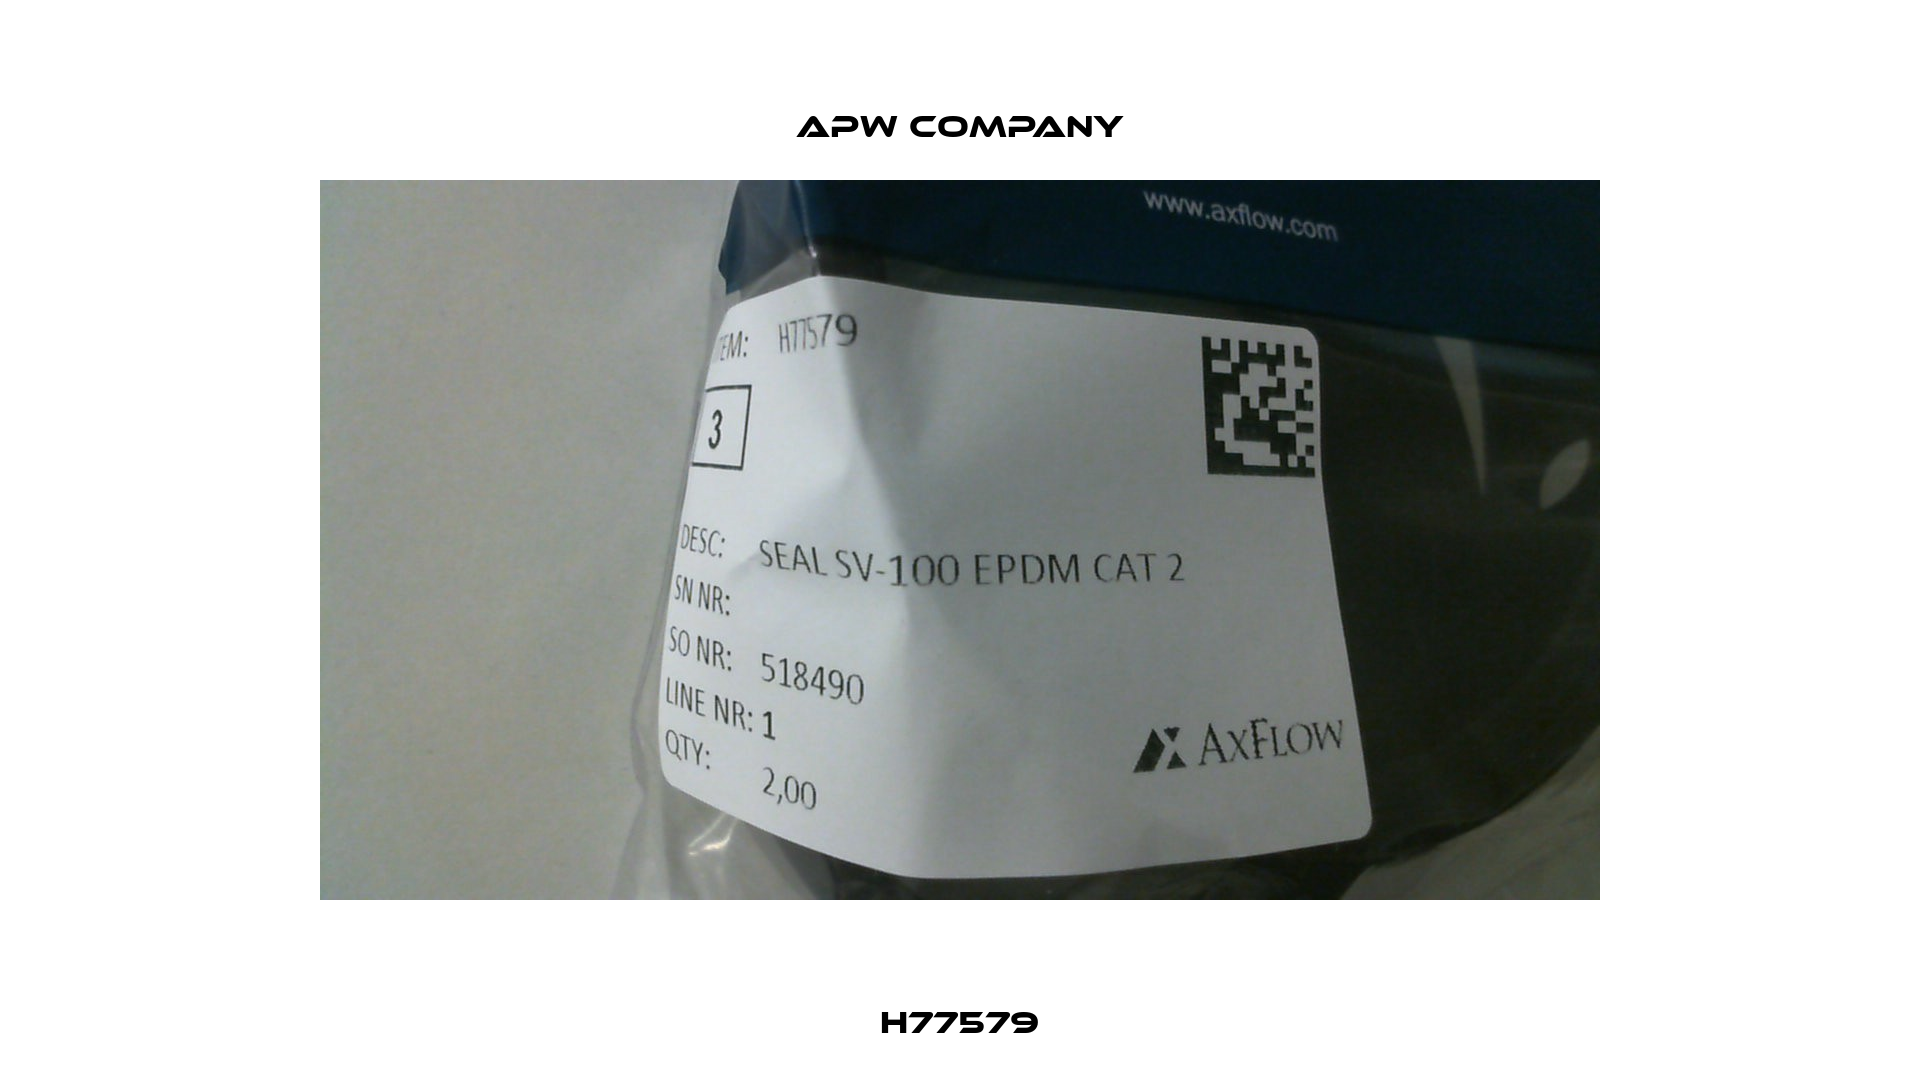 H77579 Apw Company